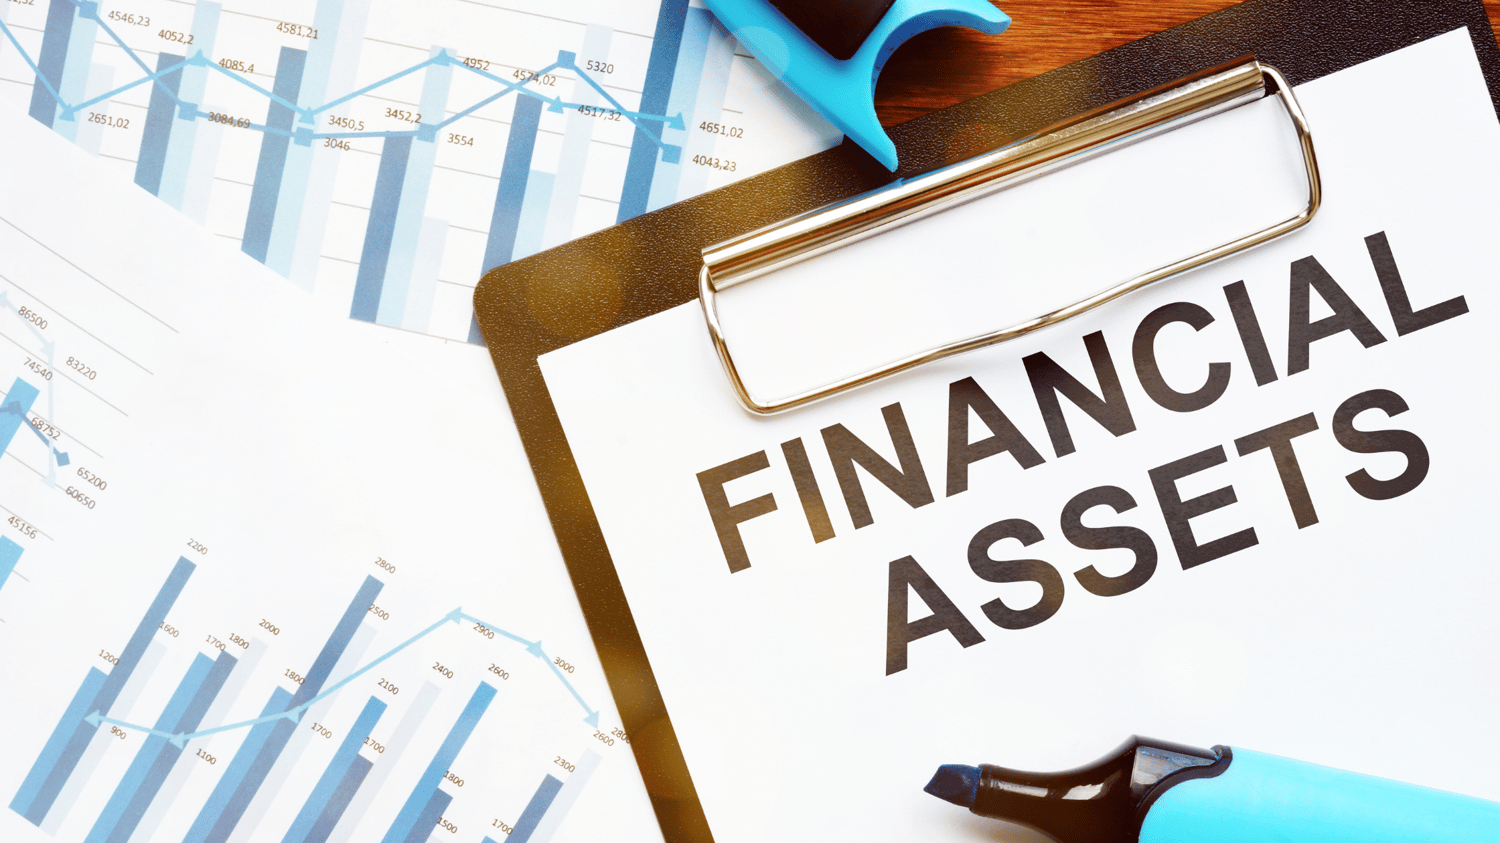 Financial Asset classes guide for beginner investors